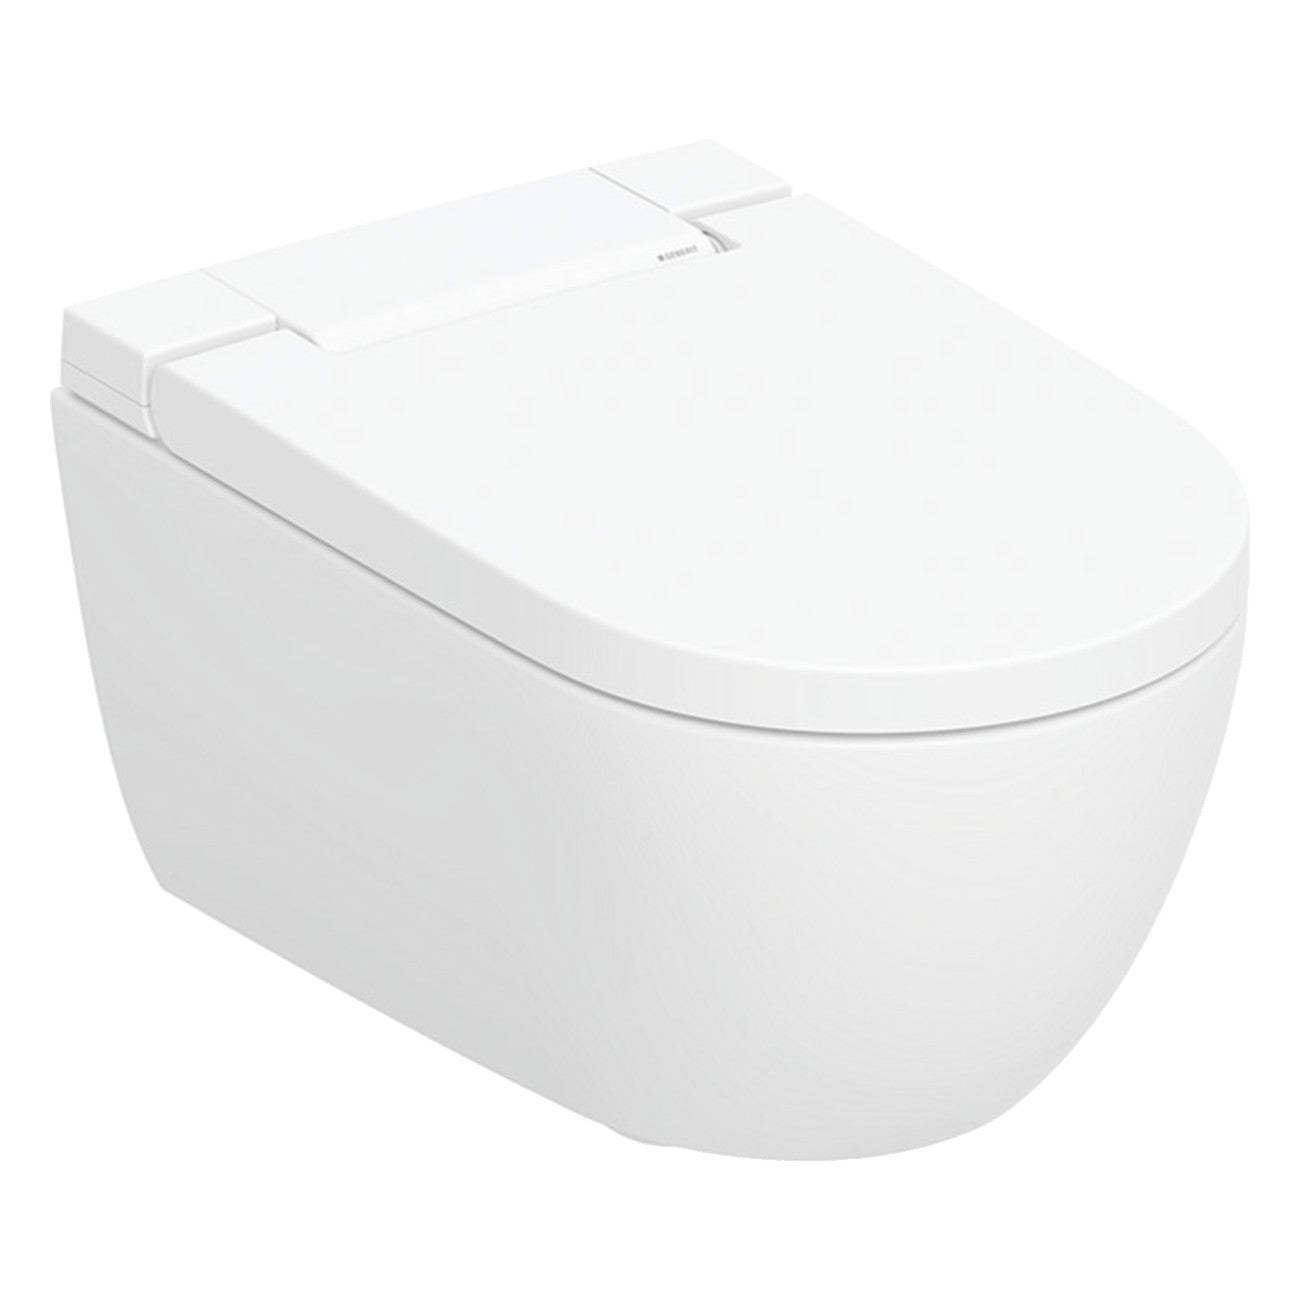 Geberit Aquaclean Alba komplett higiéniai berendezés fali WC-vel, Keratect bevonat, fehér (146.350.01.1)